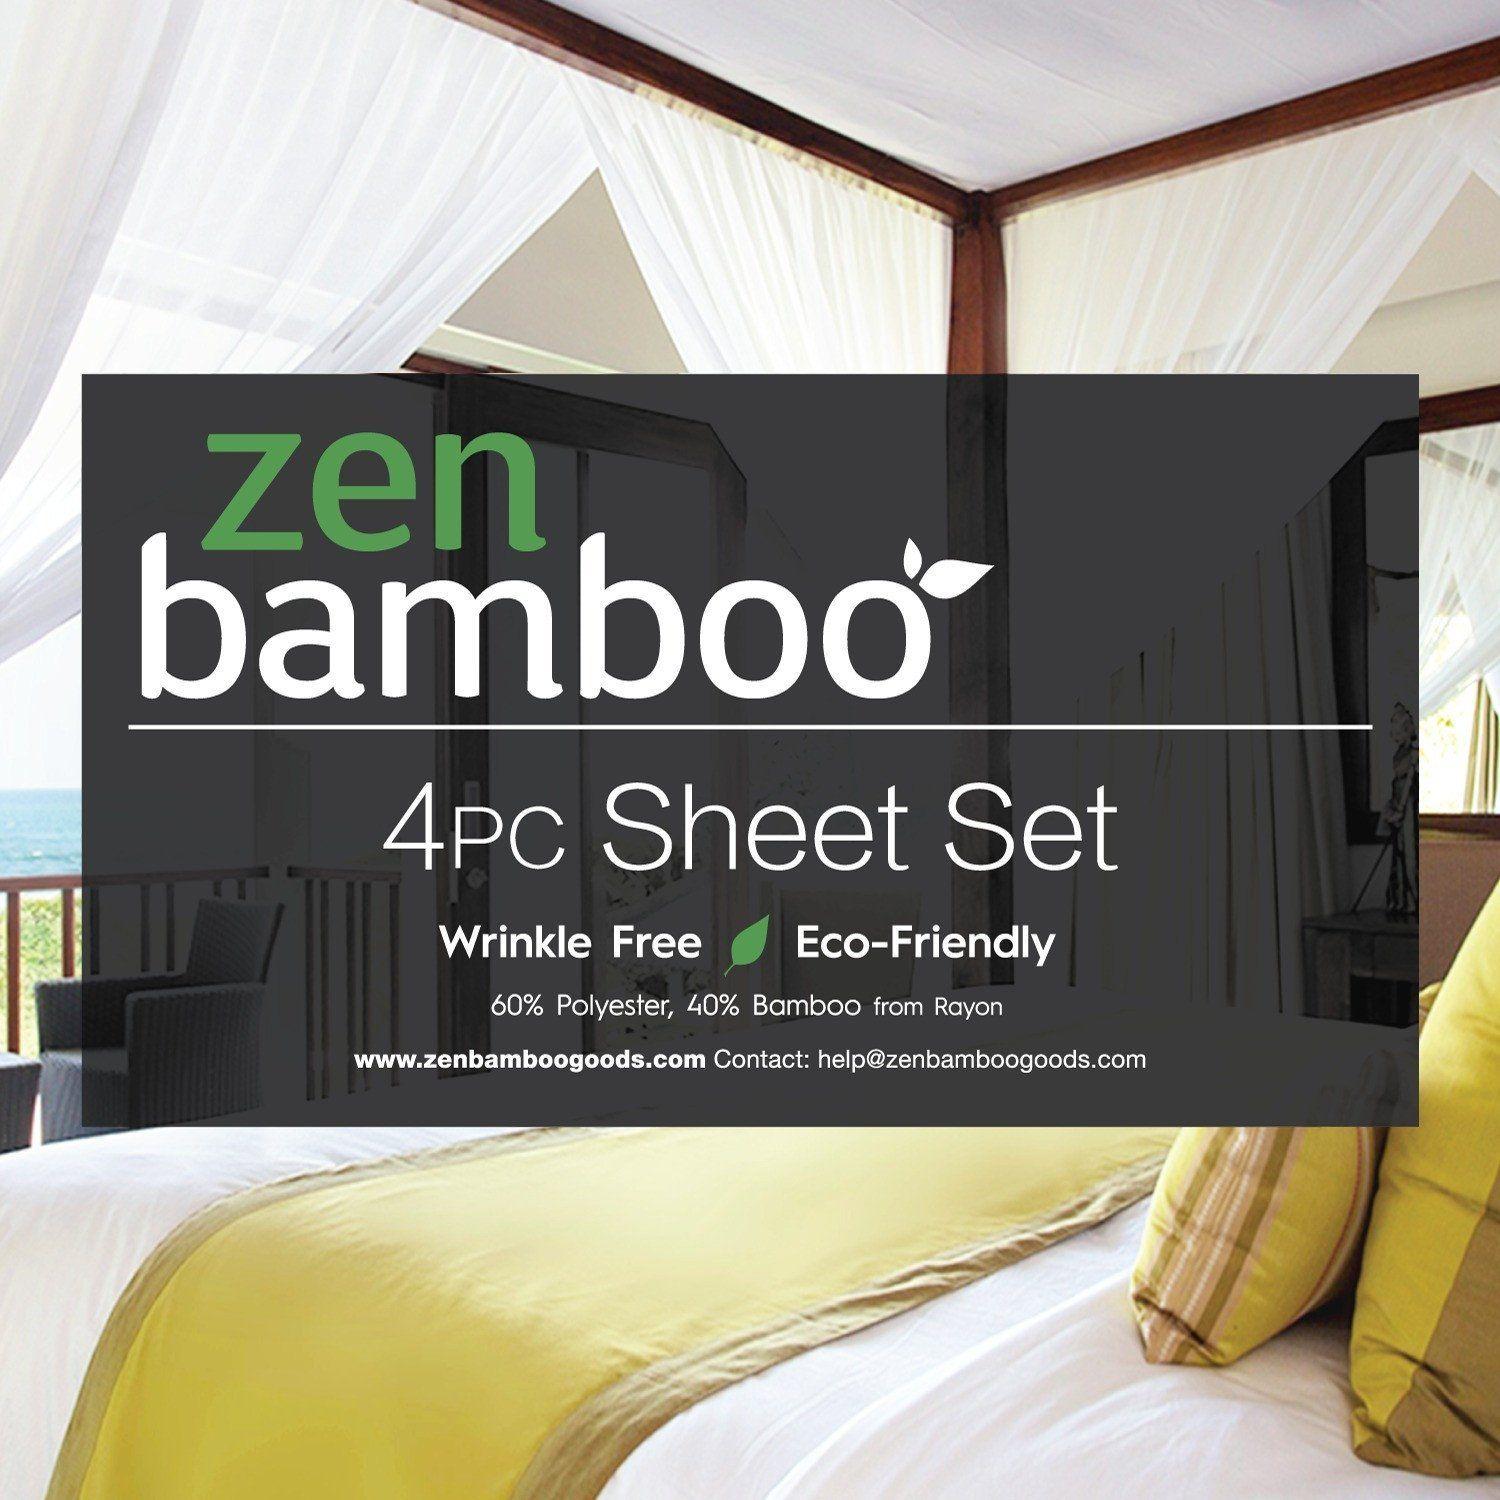 Zen Bamboo Logo - Amazon.com: Zen Bamboo Luxury 1500 Series Bed Sheets - Eco-friendly ...